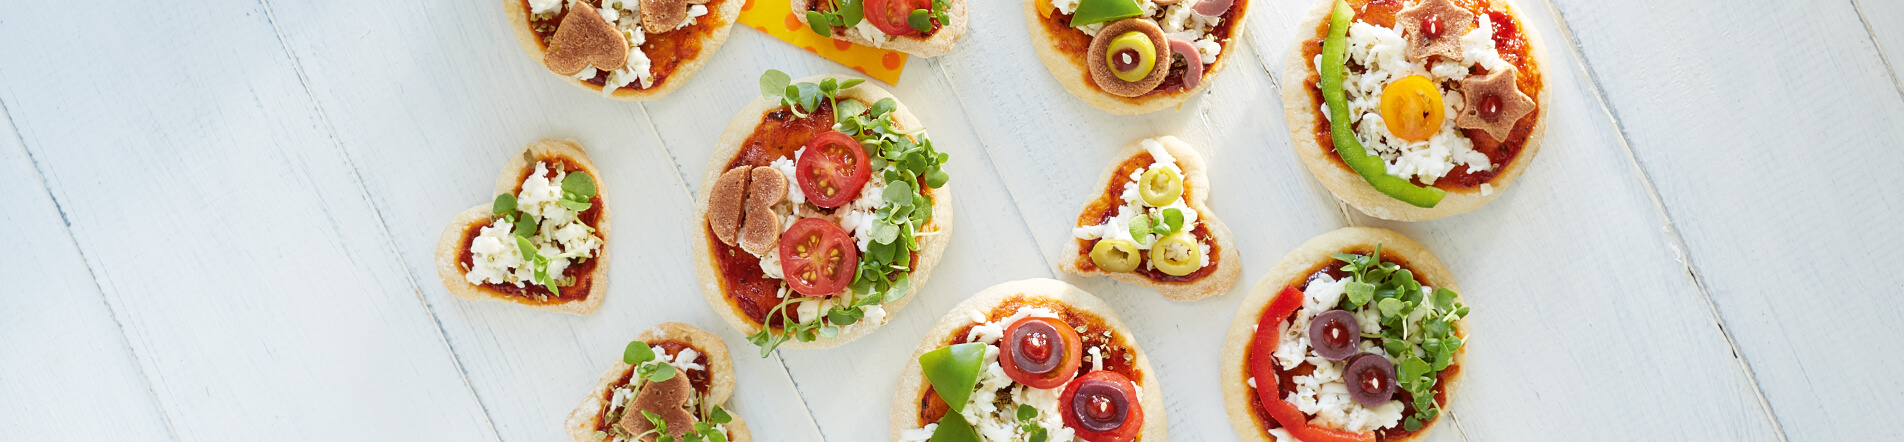 Vegan mini pizza for kids